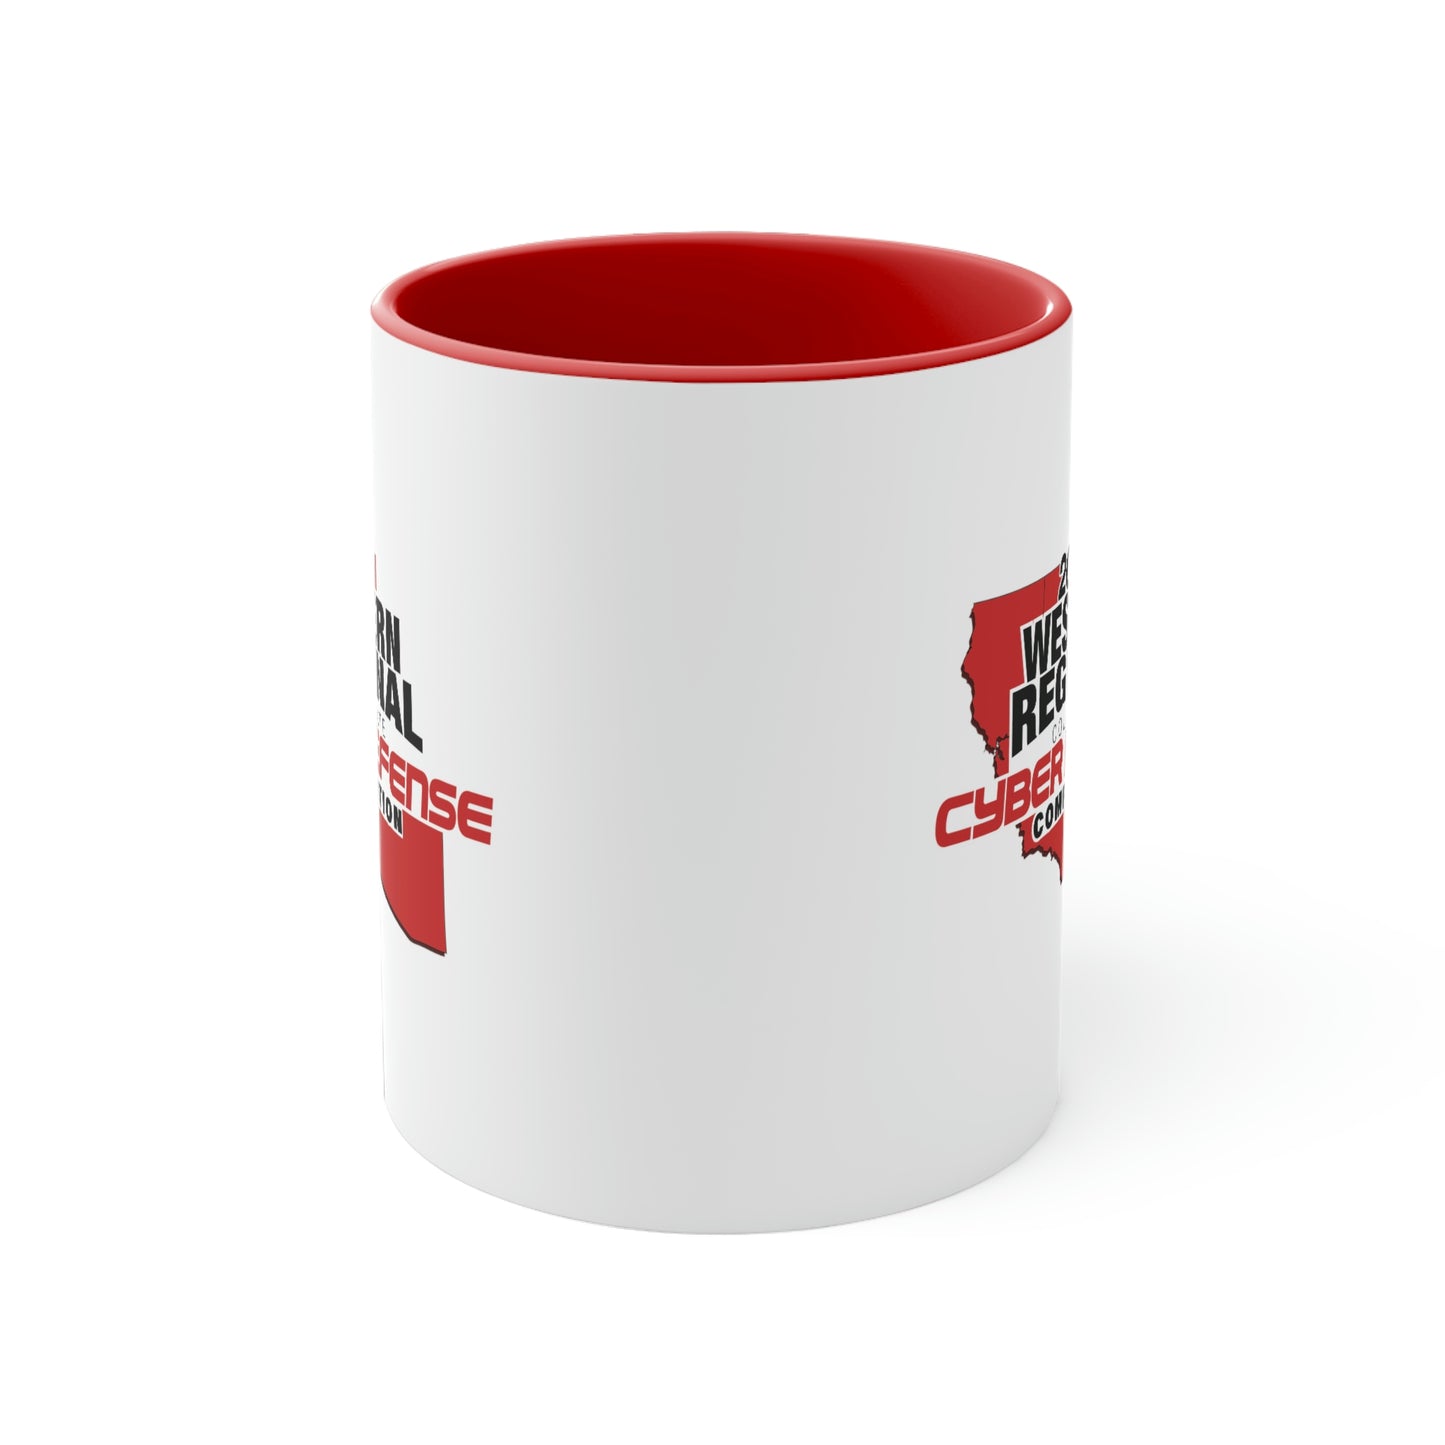 WRCCDC 2023 Competition Logo Accent Coffee Mug, 11oz